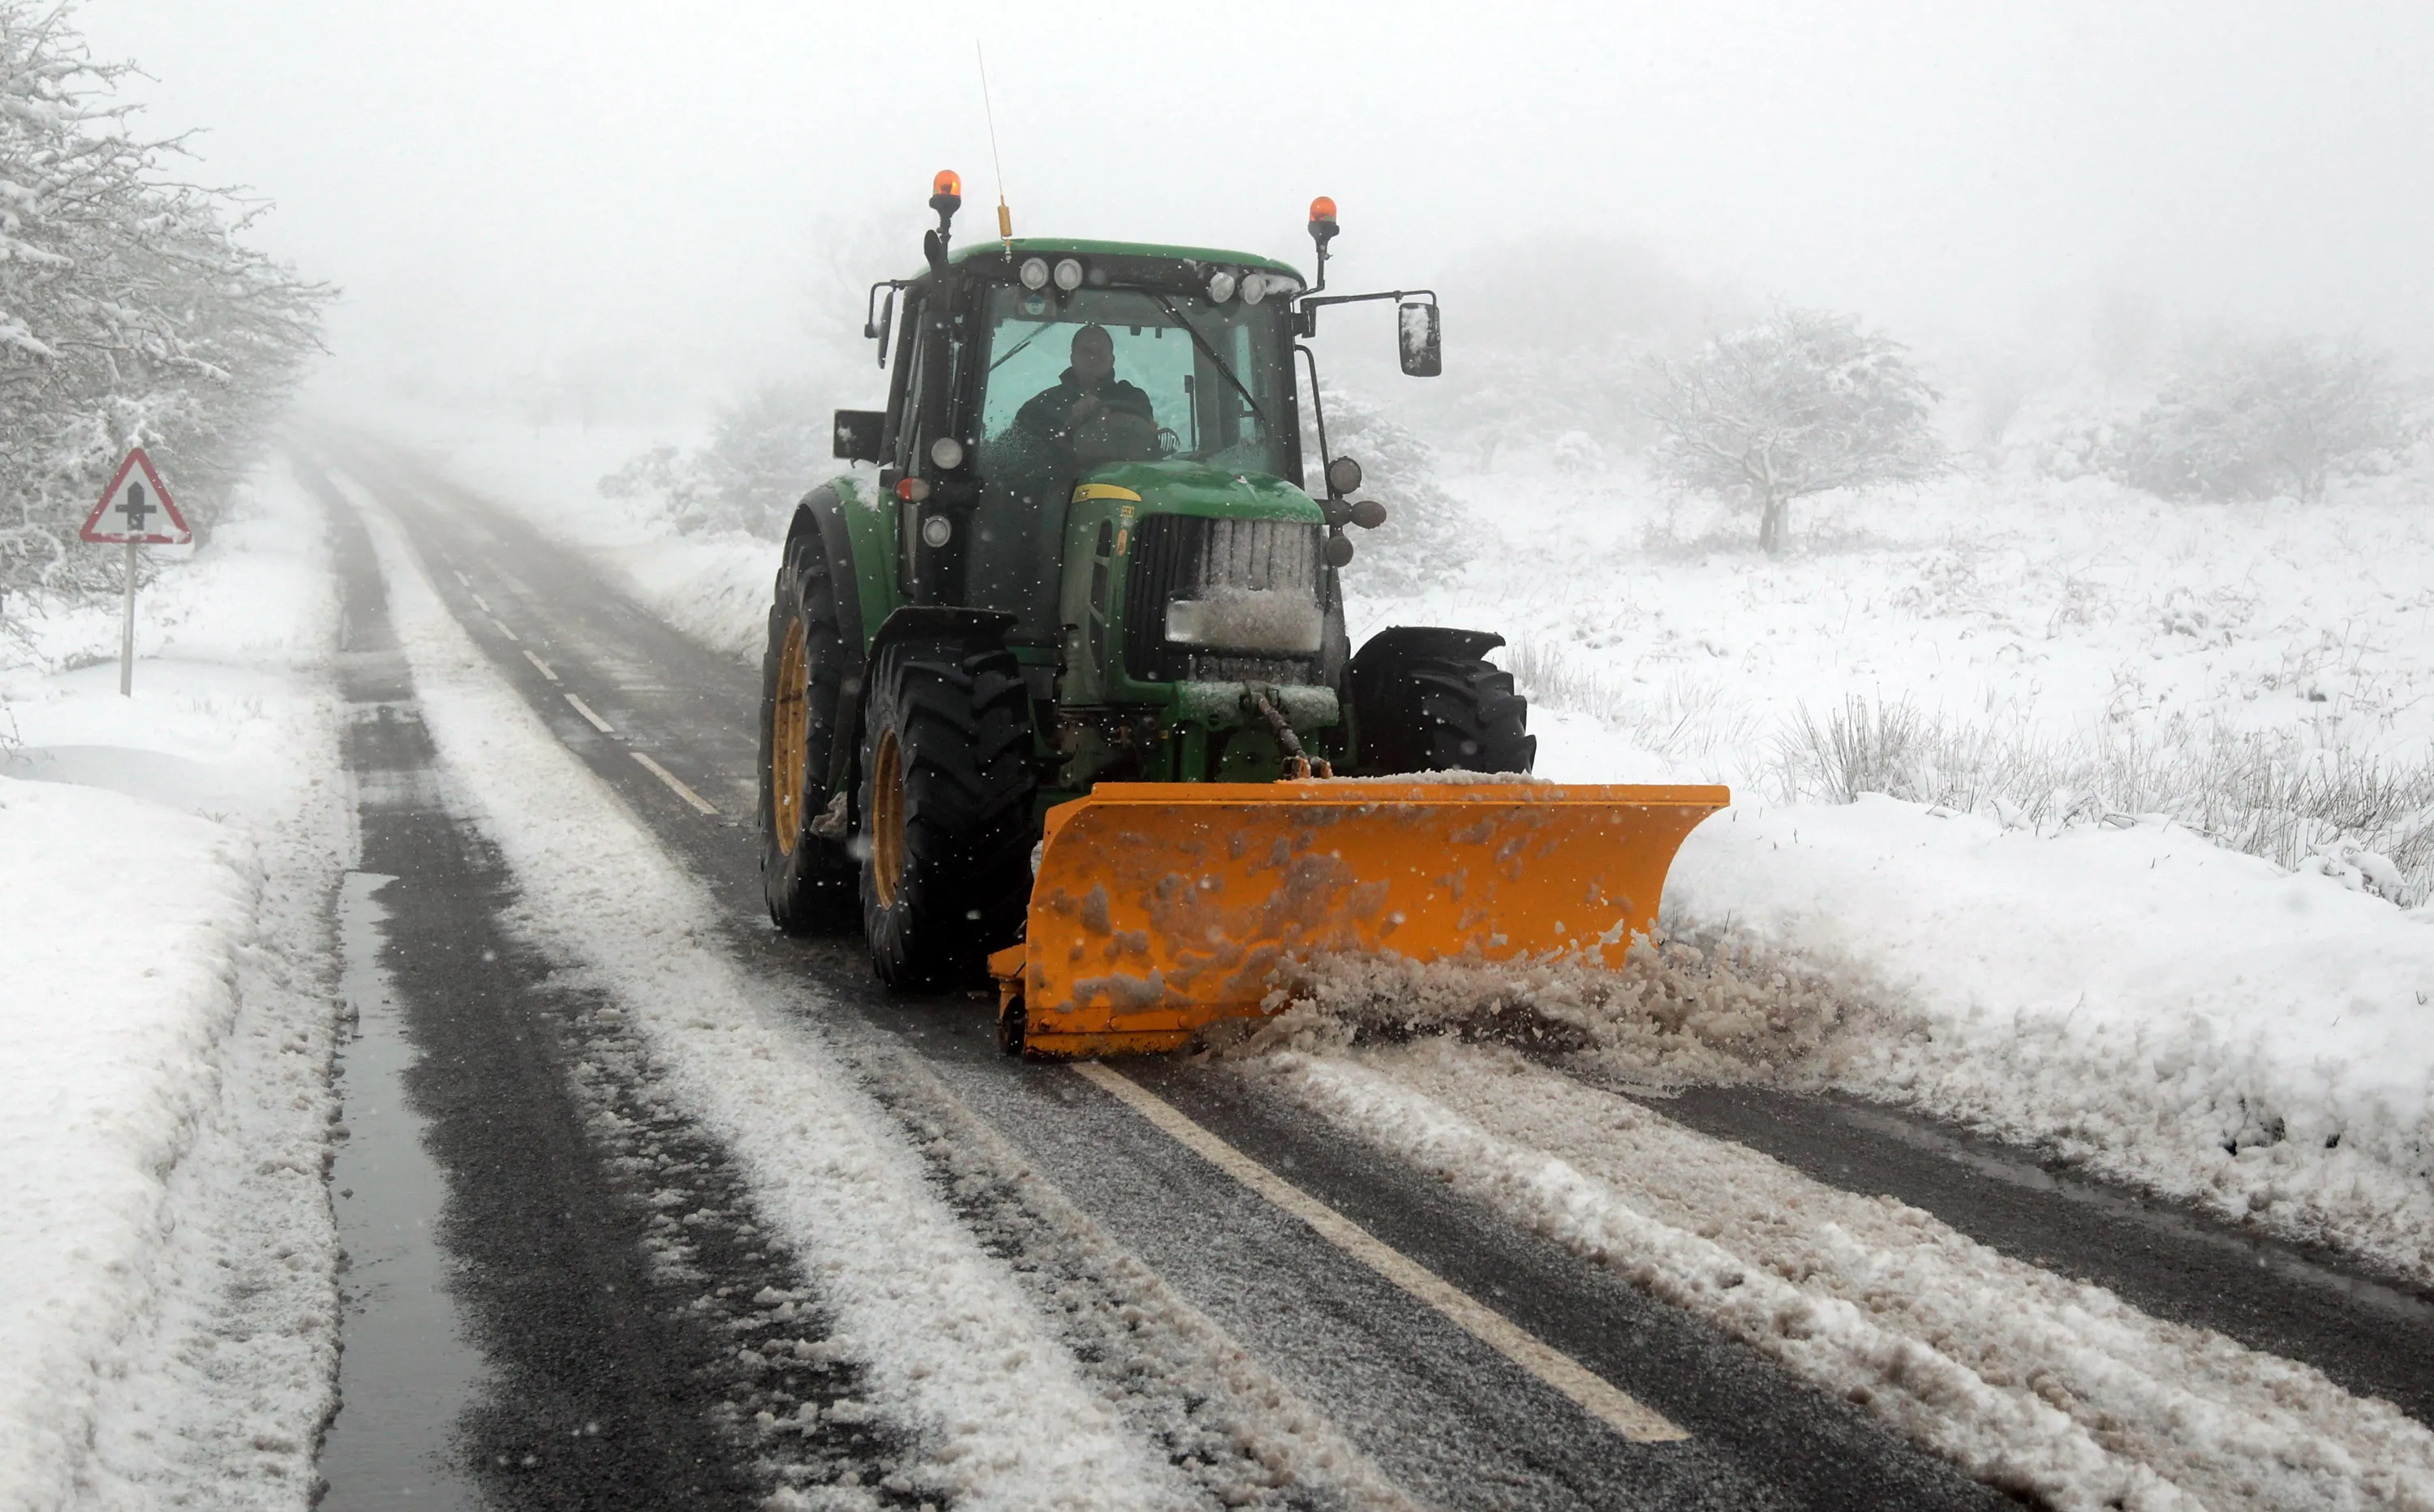 Трактора чистят дороги. Трактор для уборки снега. Уборка снега. Очистка дорог от снега. Трактор для чистки дорог.